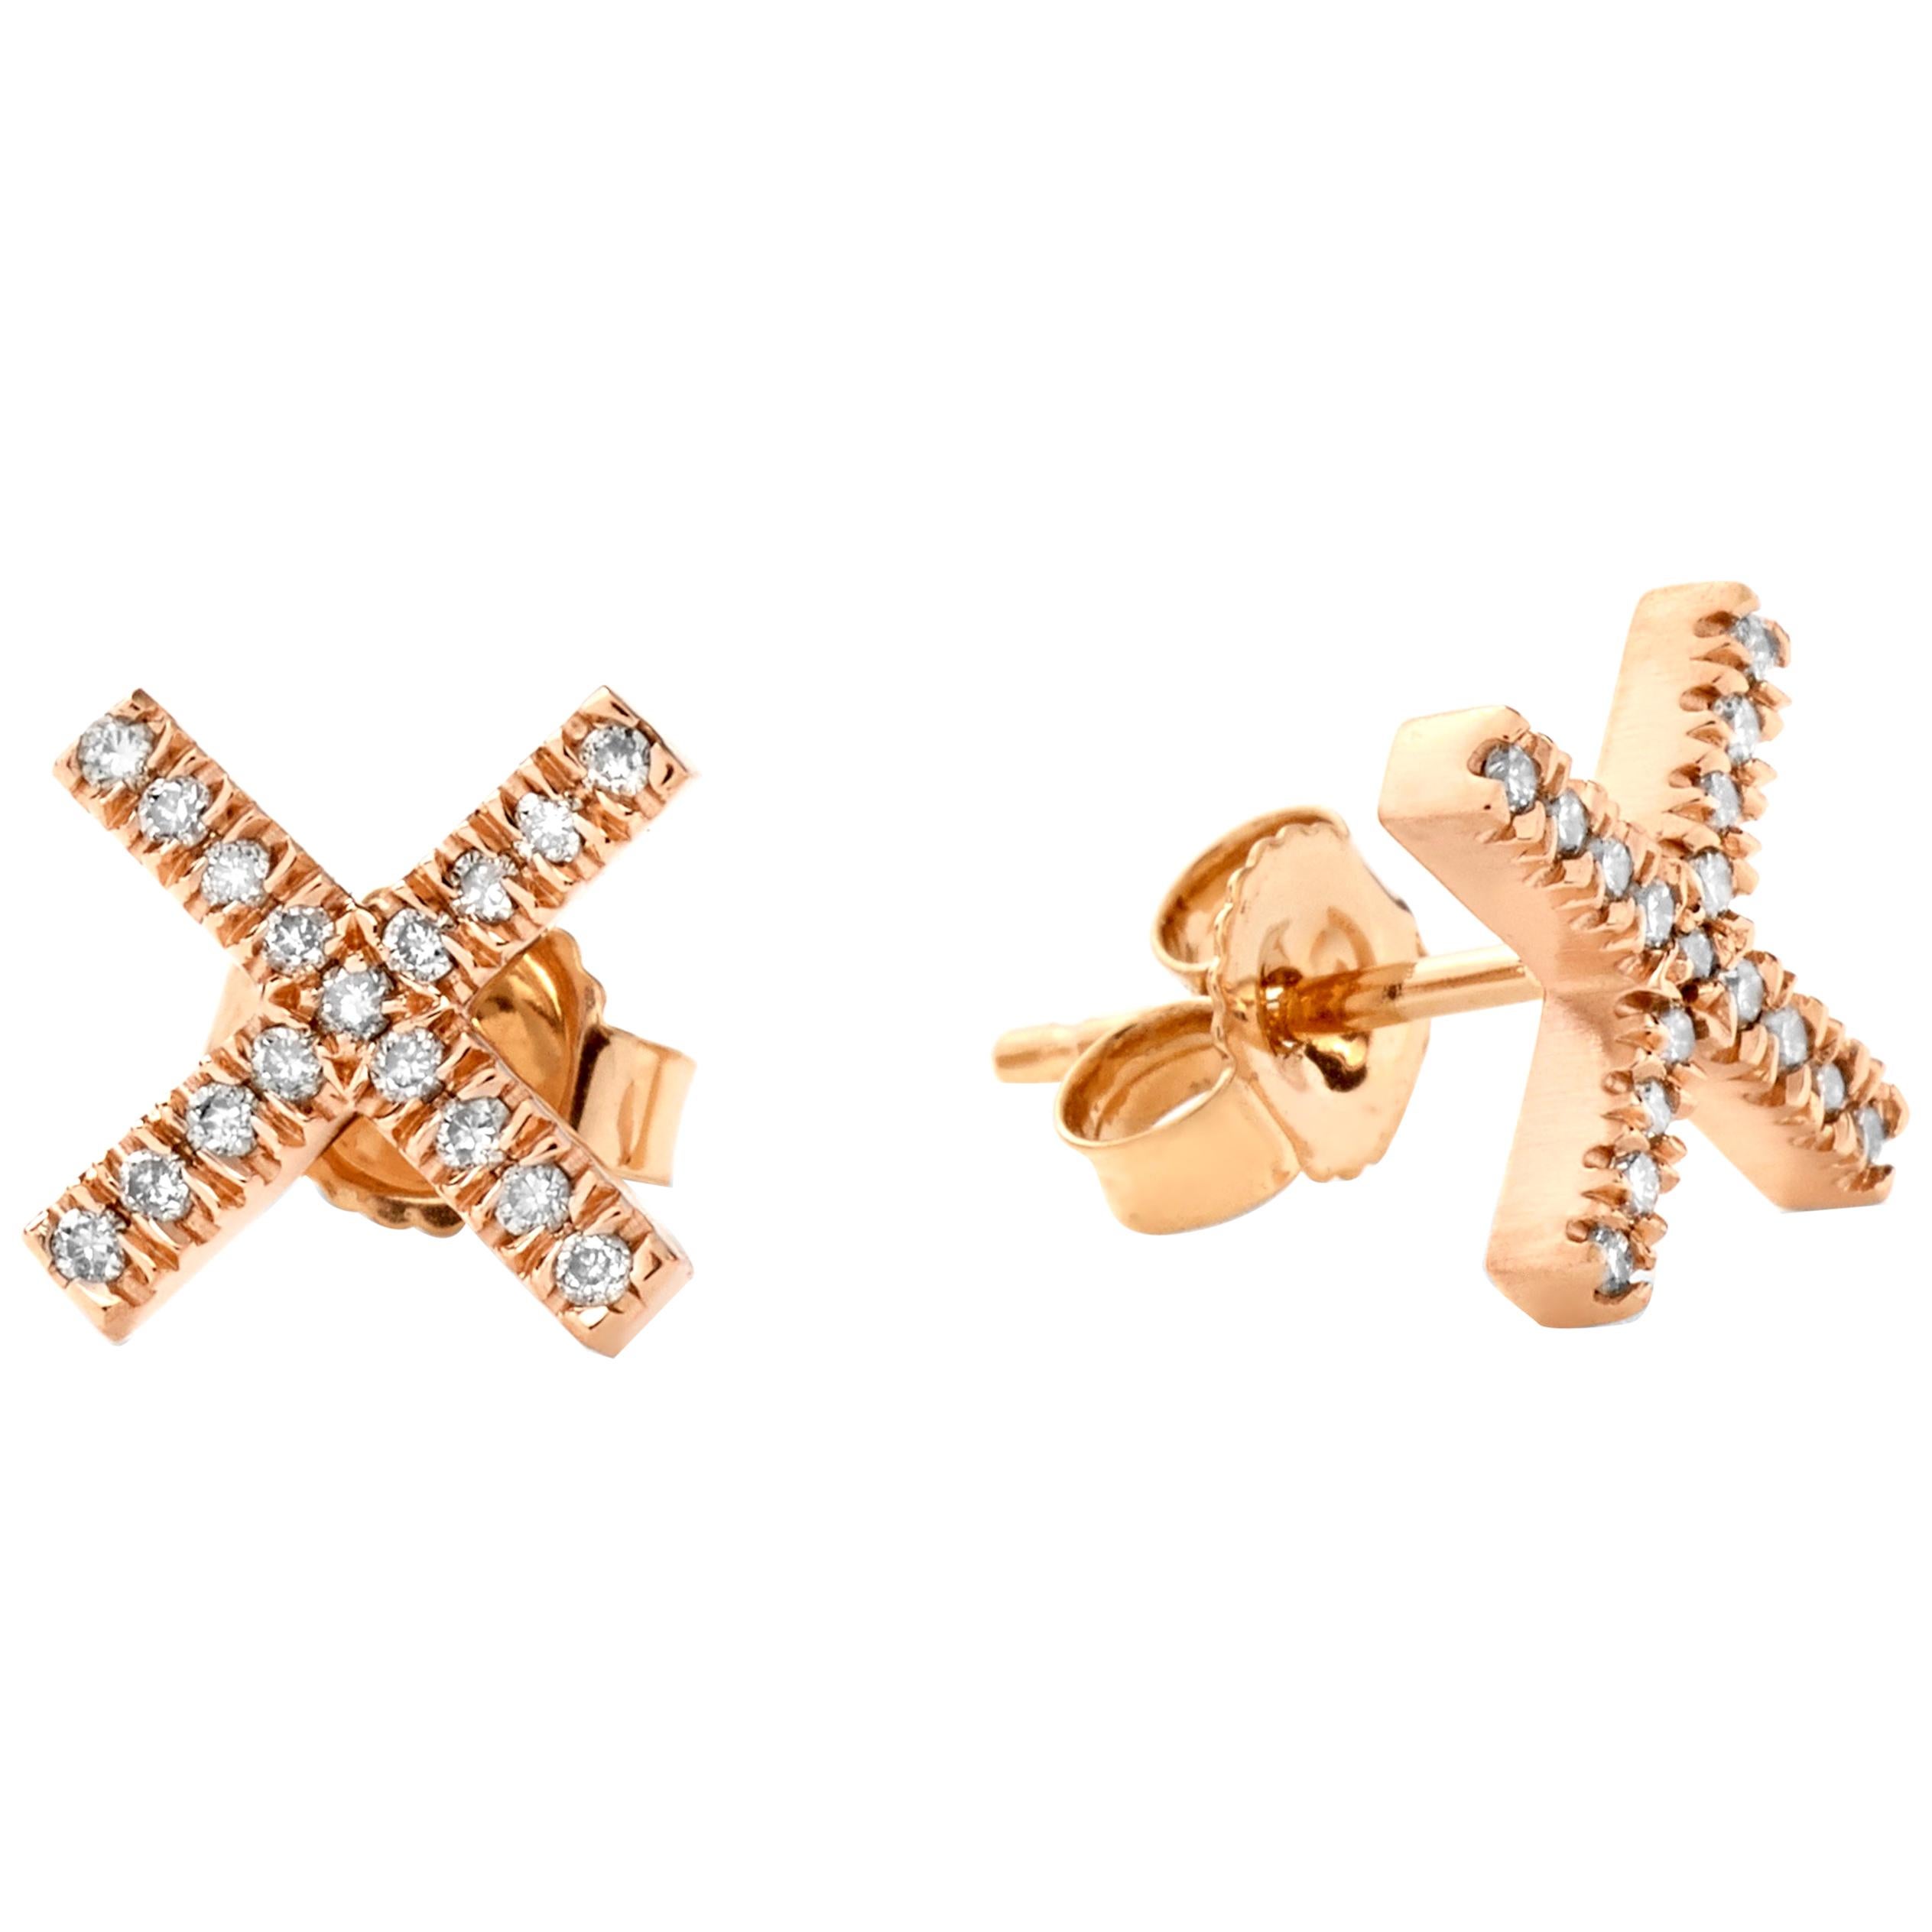 Eva Fehren X-Stud Earrings in 18K Rose Gold with Pale Champagne Diamonds